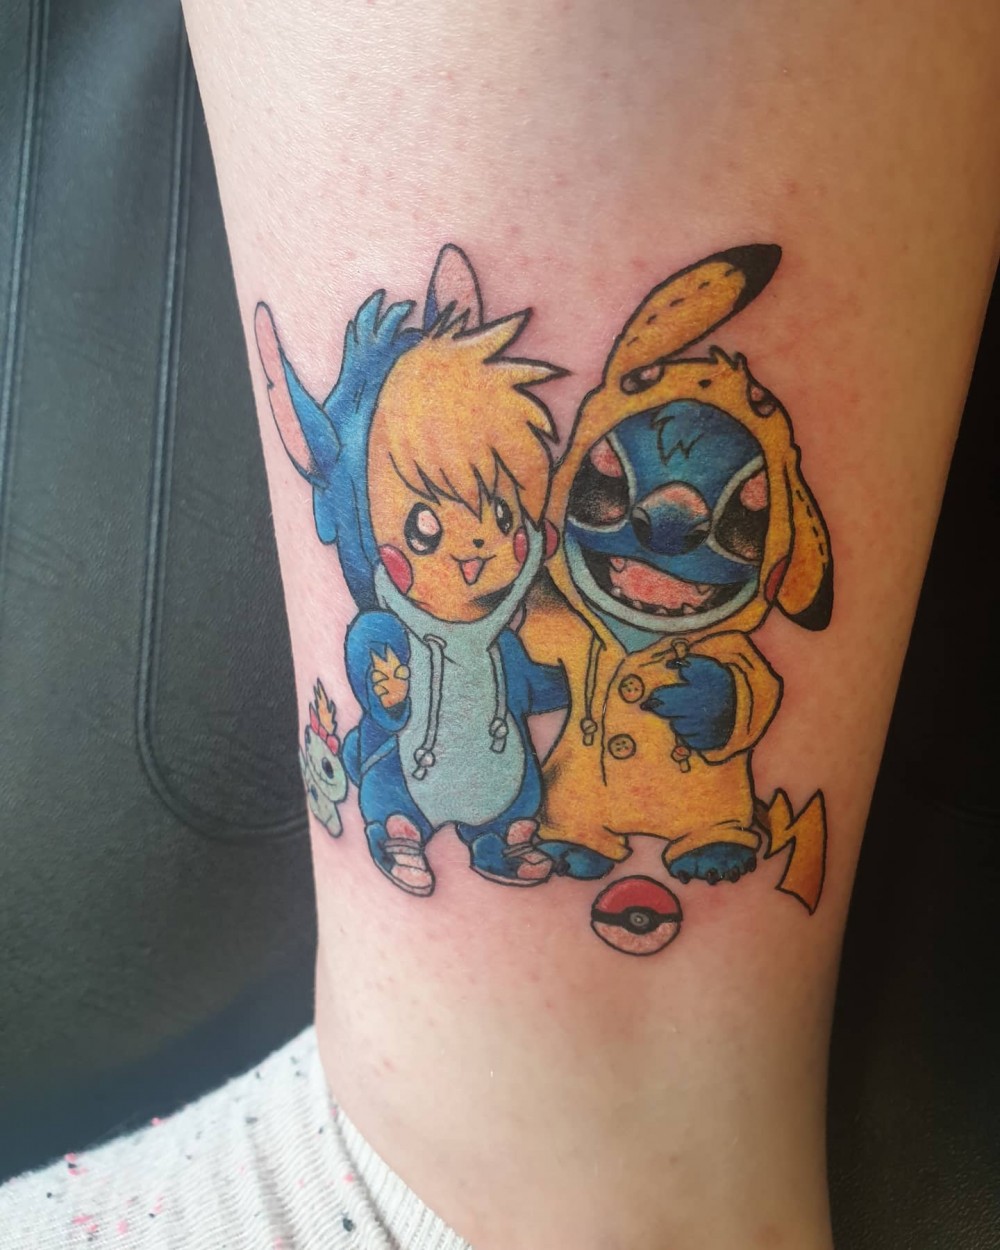 Mẫu xăm hình Stitch và Pikachu